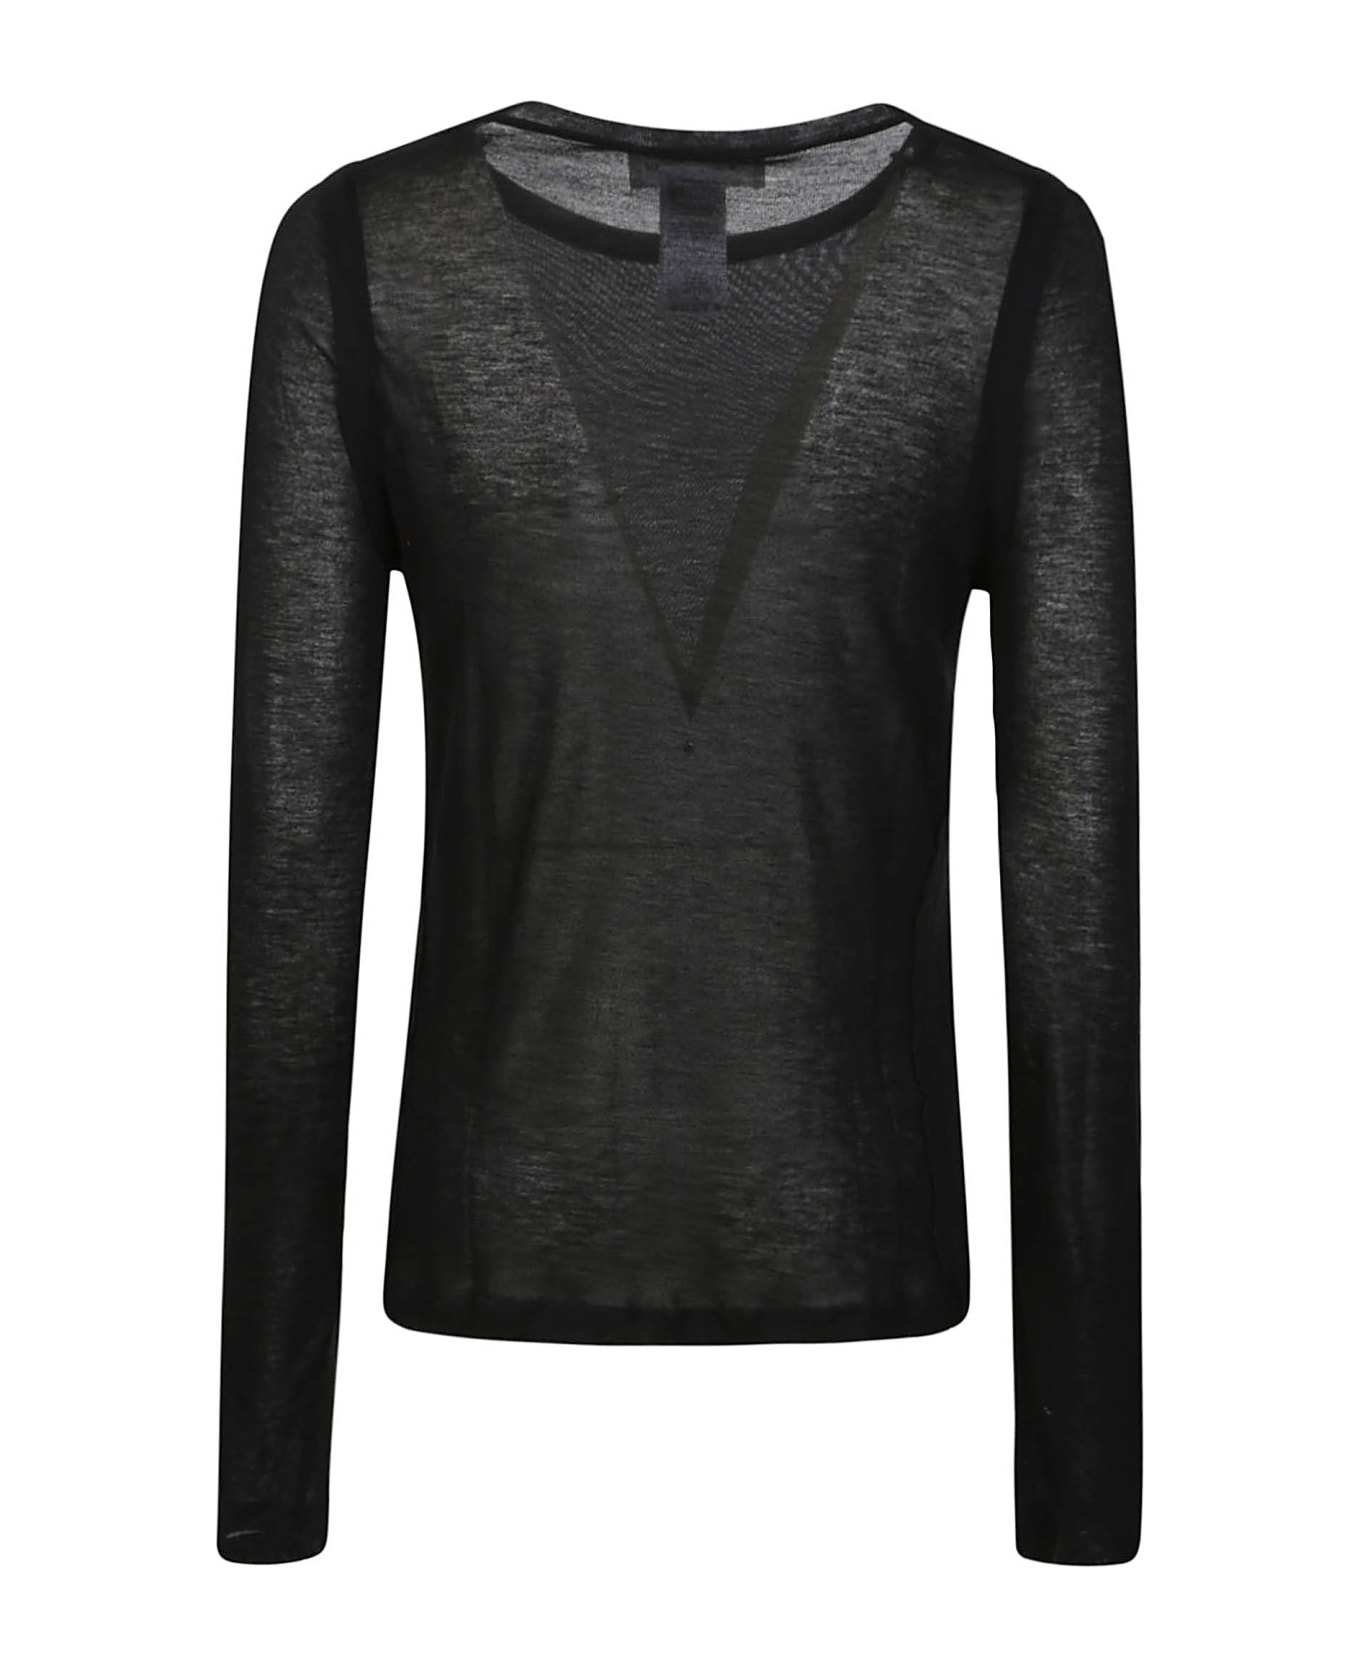 Victoria Beckham Long Sleeve Top - Black Tシャツ